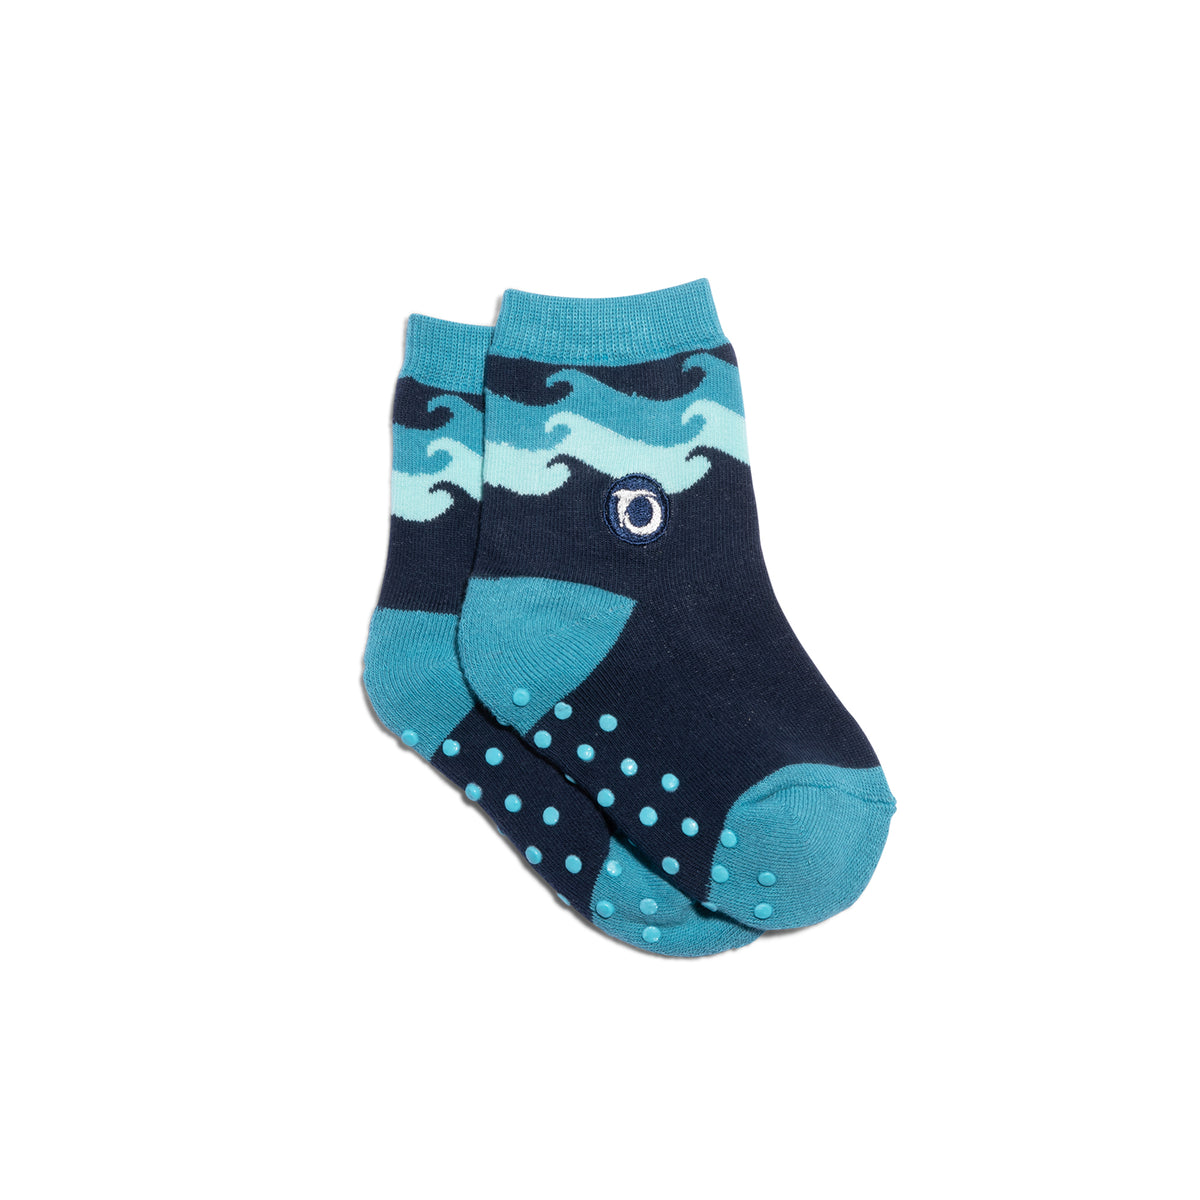 Toddler Socks that Protect Oceans